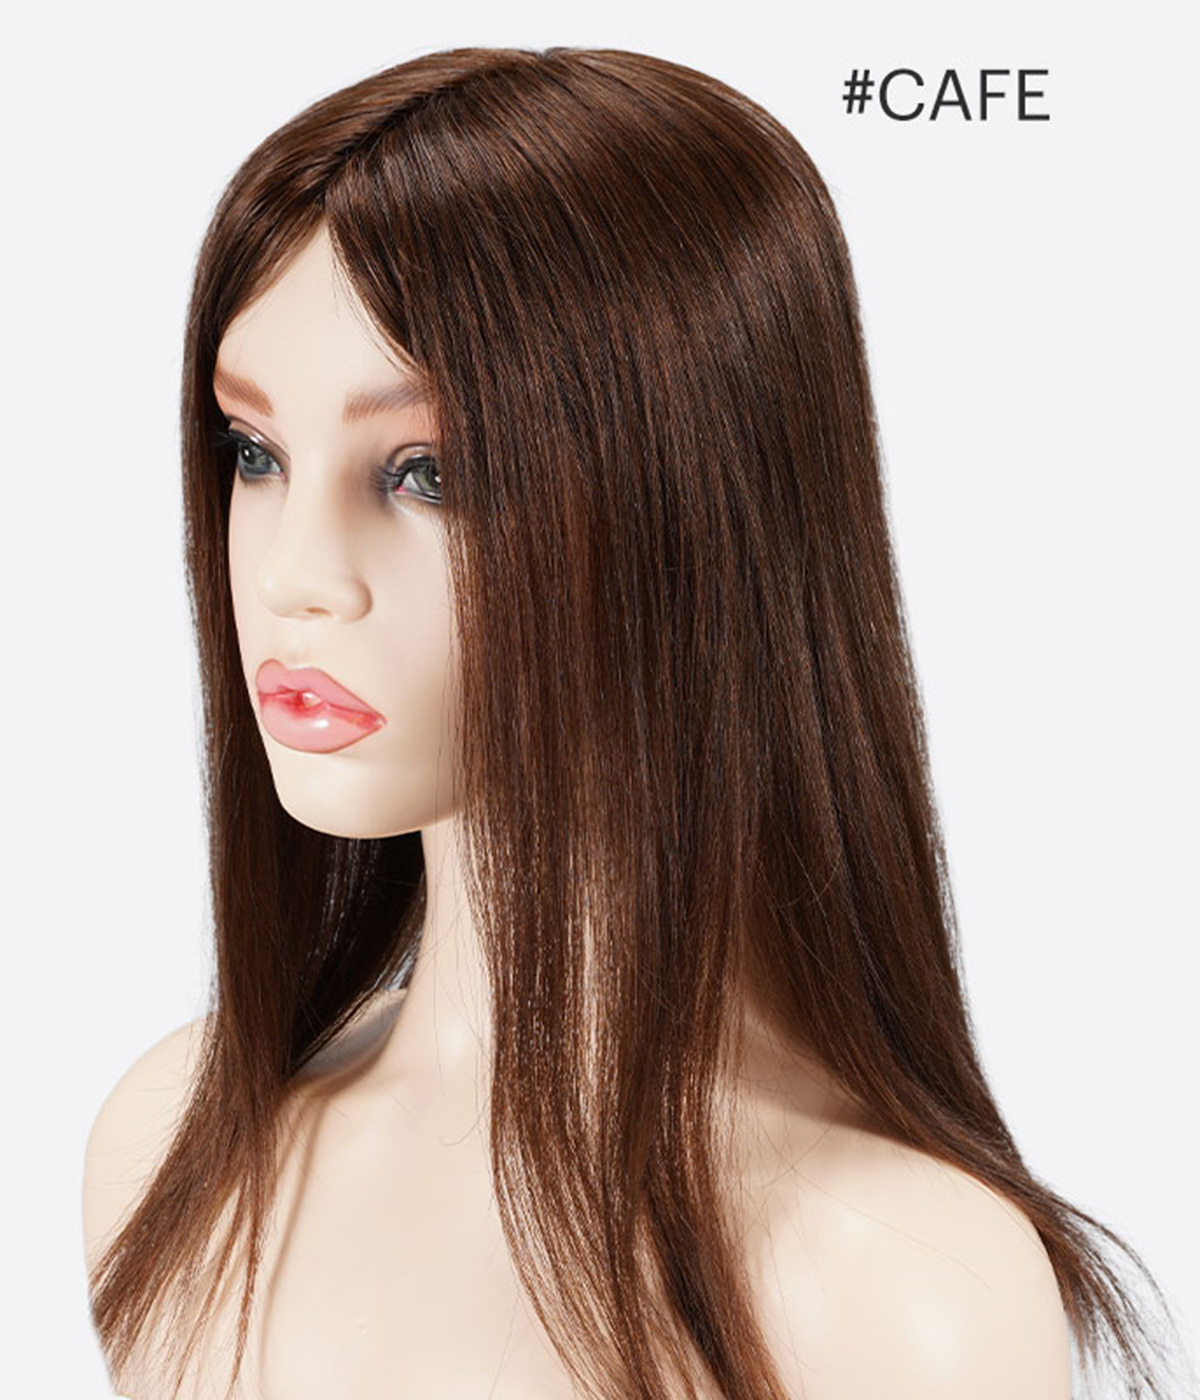 6"x6.5" Fishnet Hair Topper | Hair Loss Integration System | Micro Line Topper 